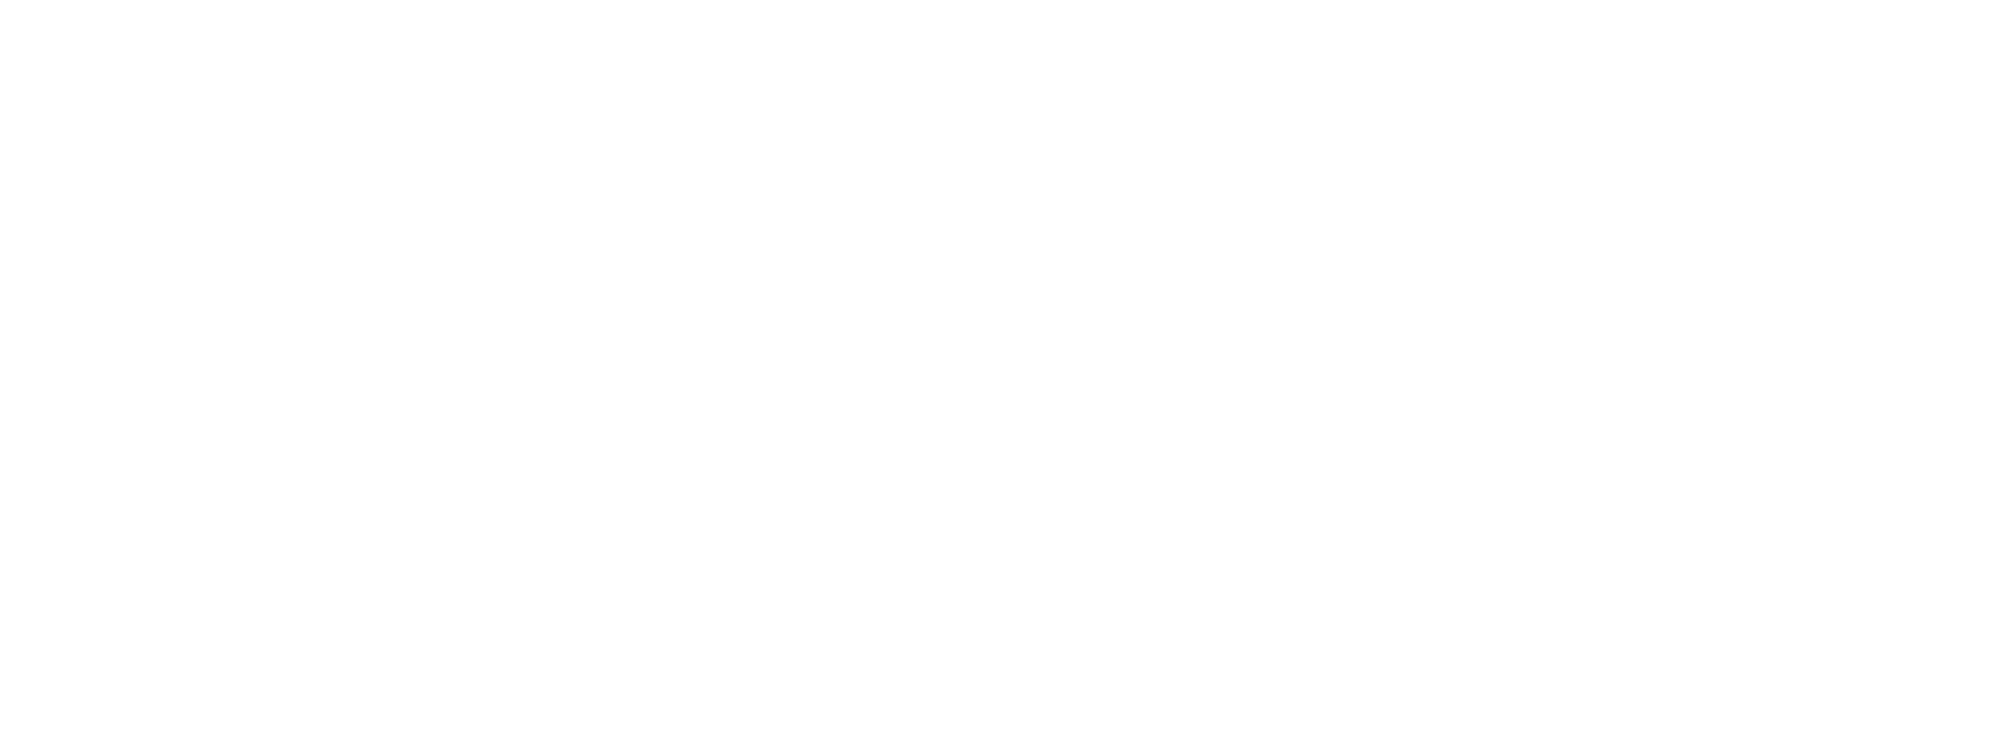 noblechairs HERO Nuka Cola Edition title logo